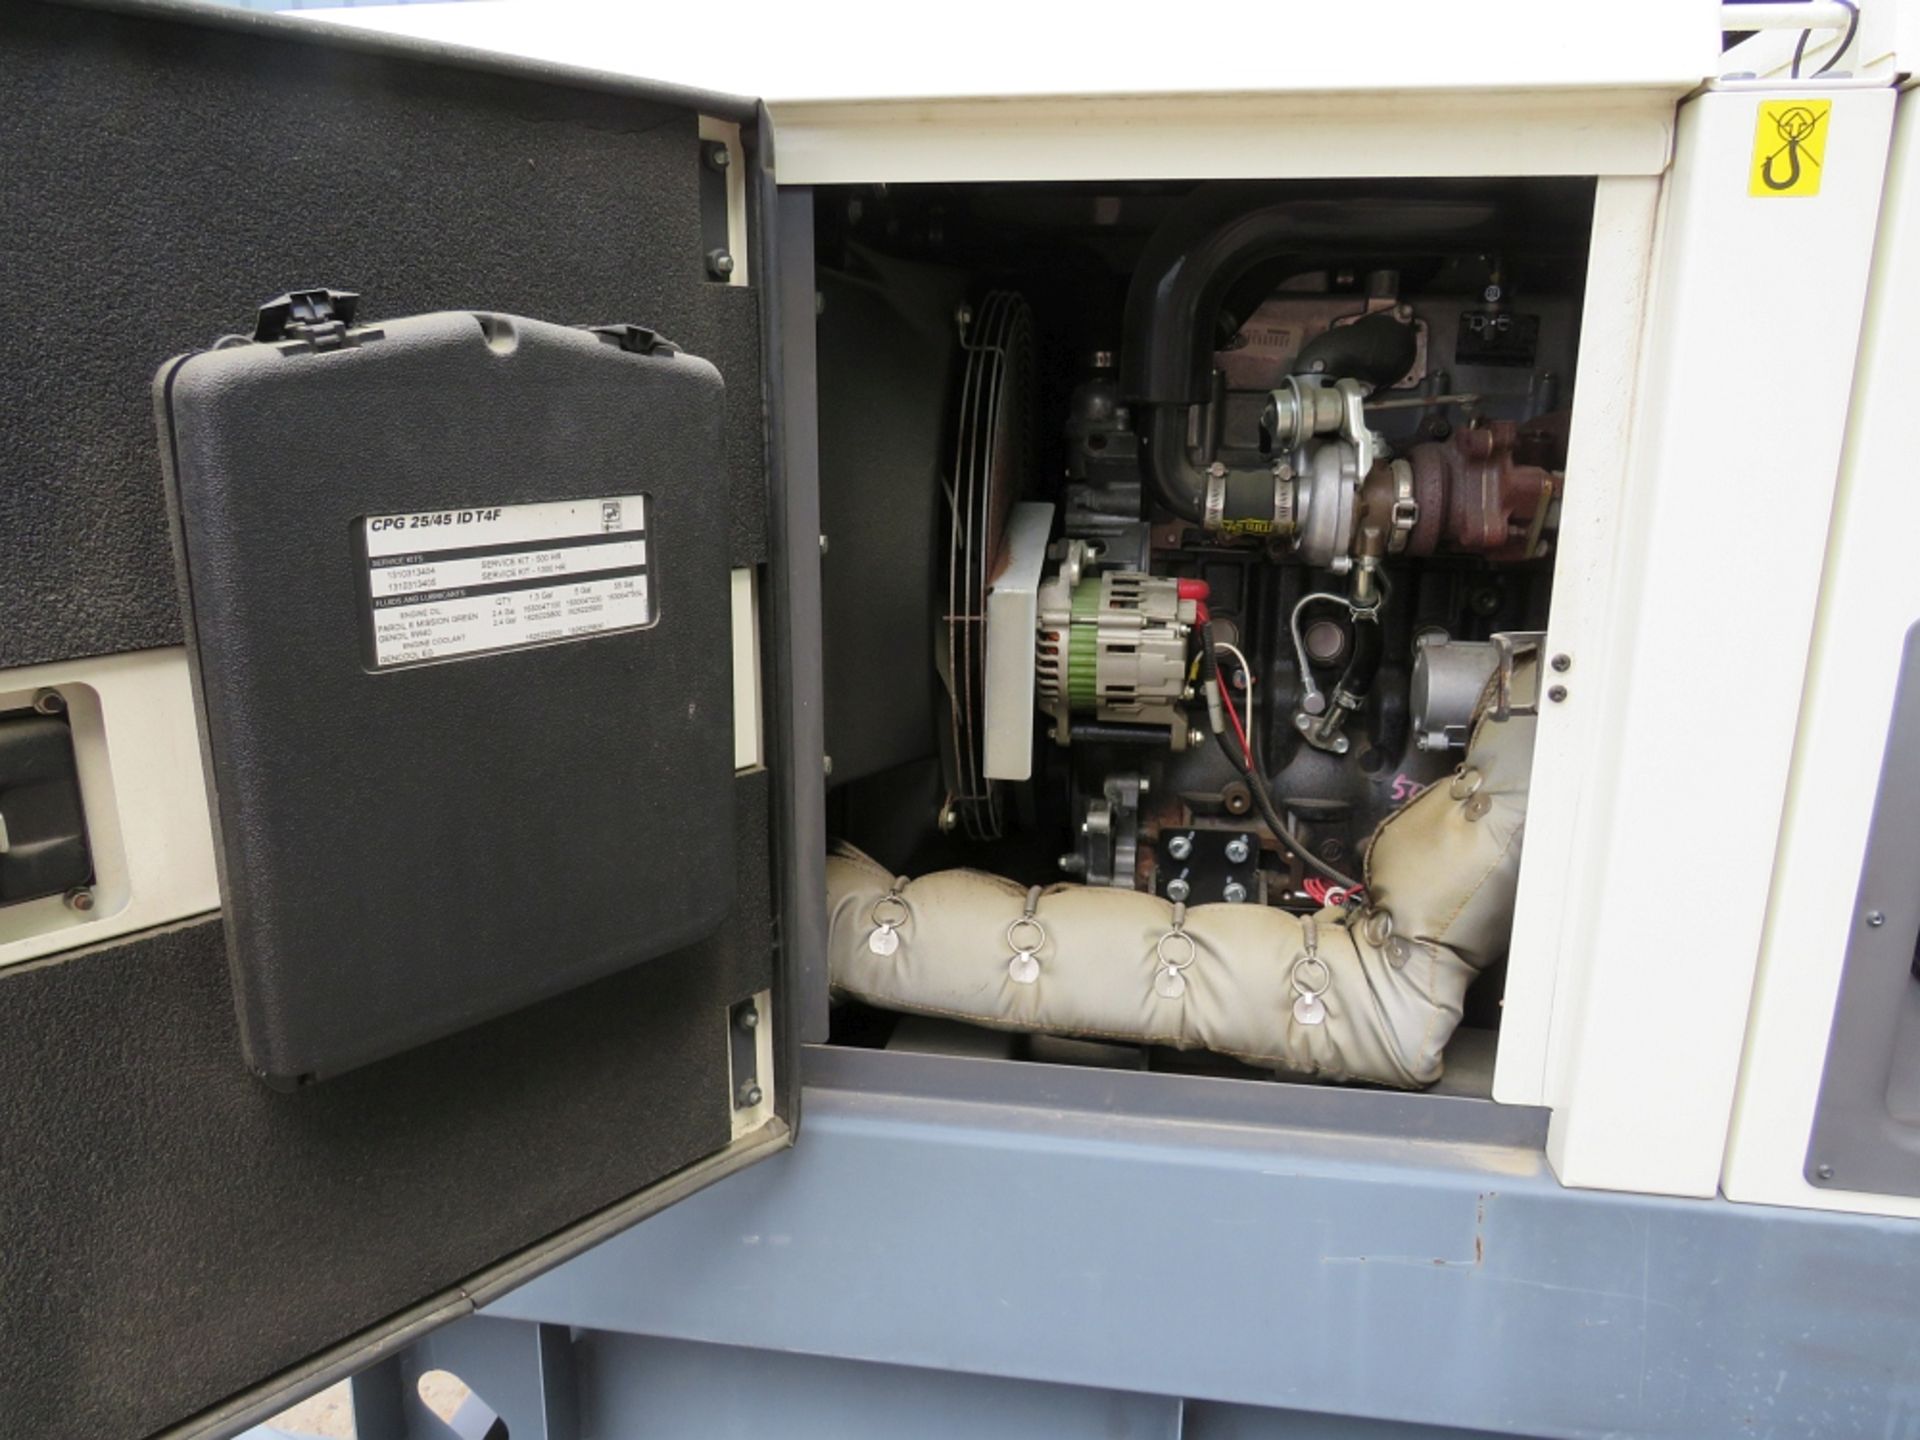 2015 Chichago Pneumatic Towable Quiet Generator, Mdl CPG251DT4F - Image 6 of 10